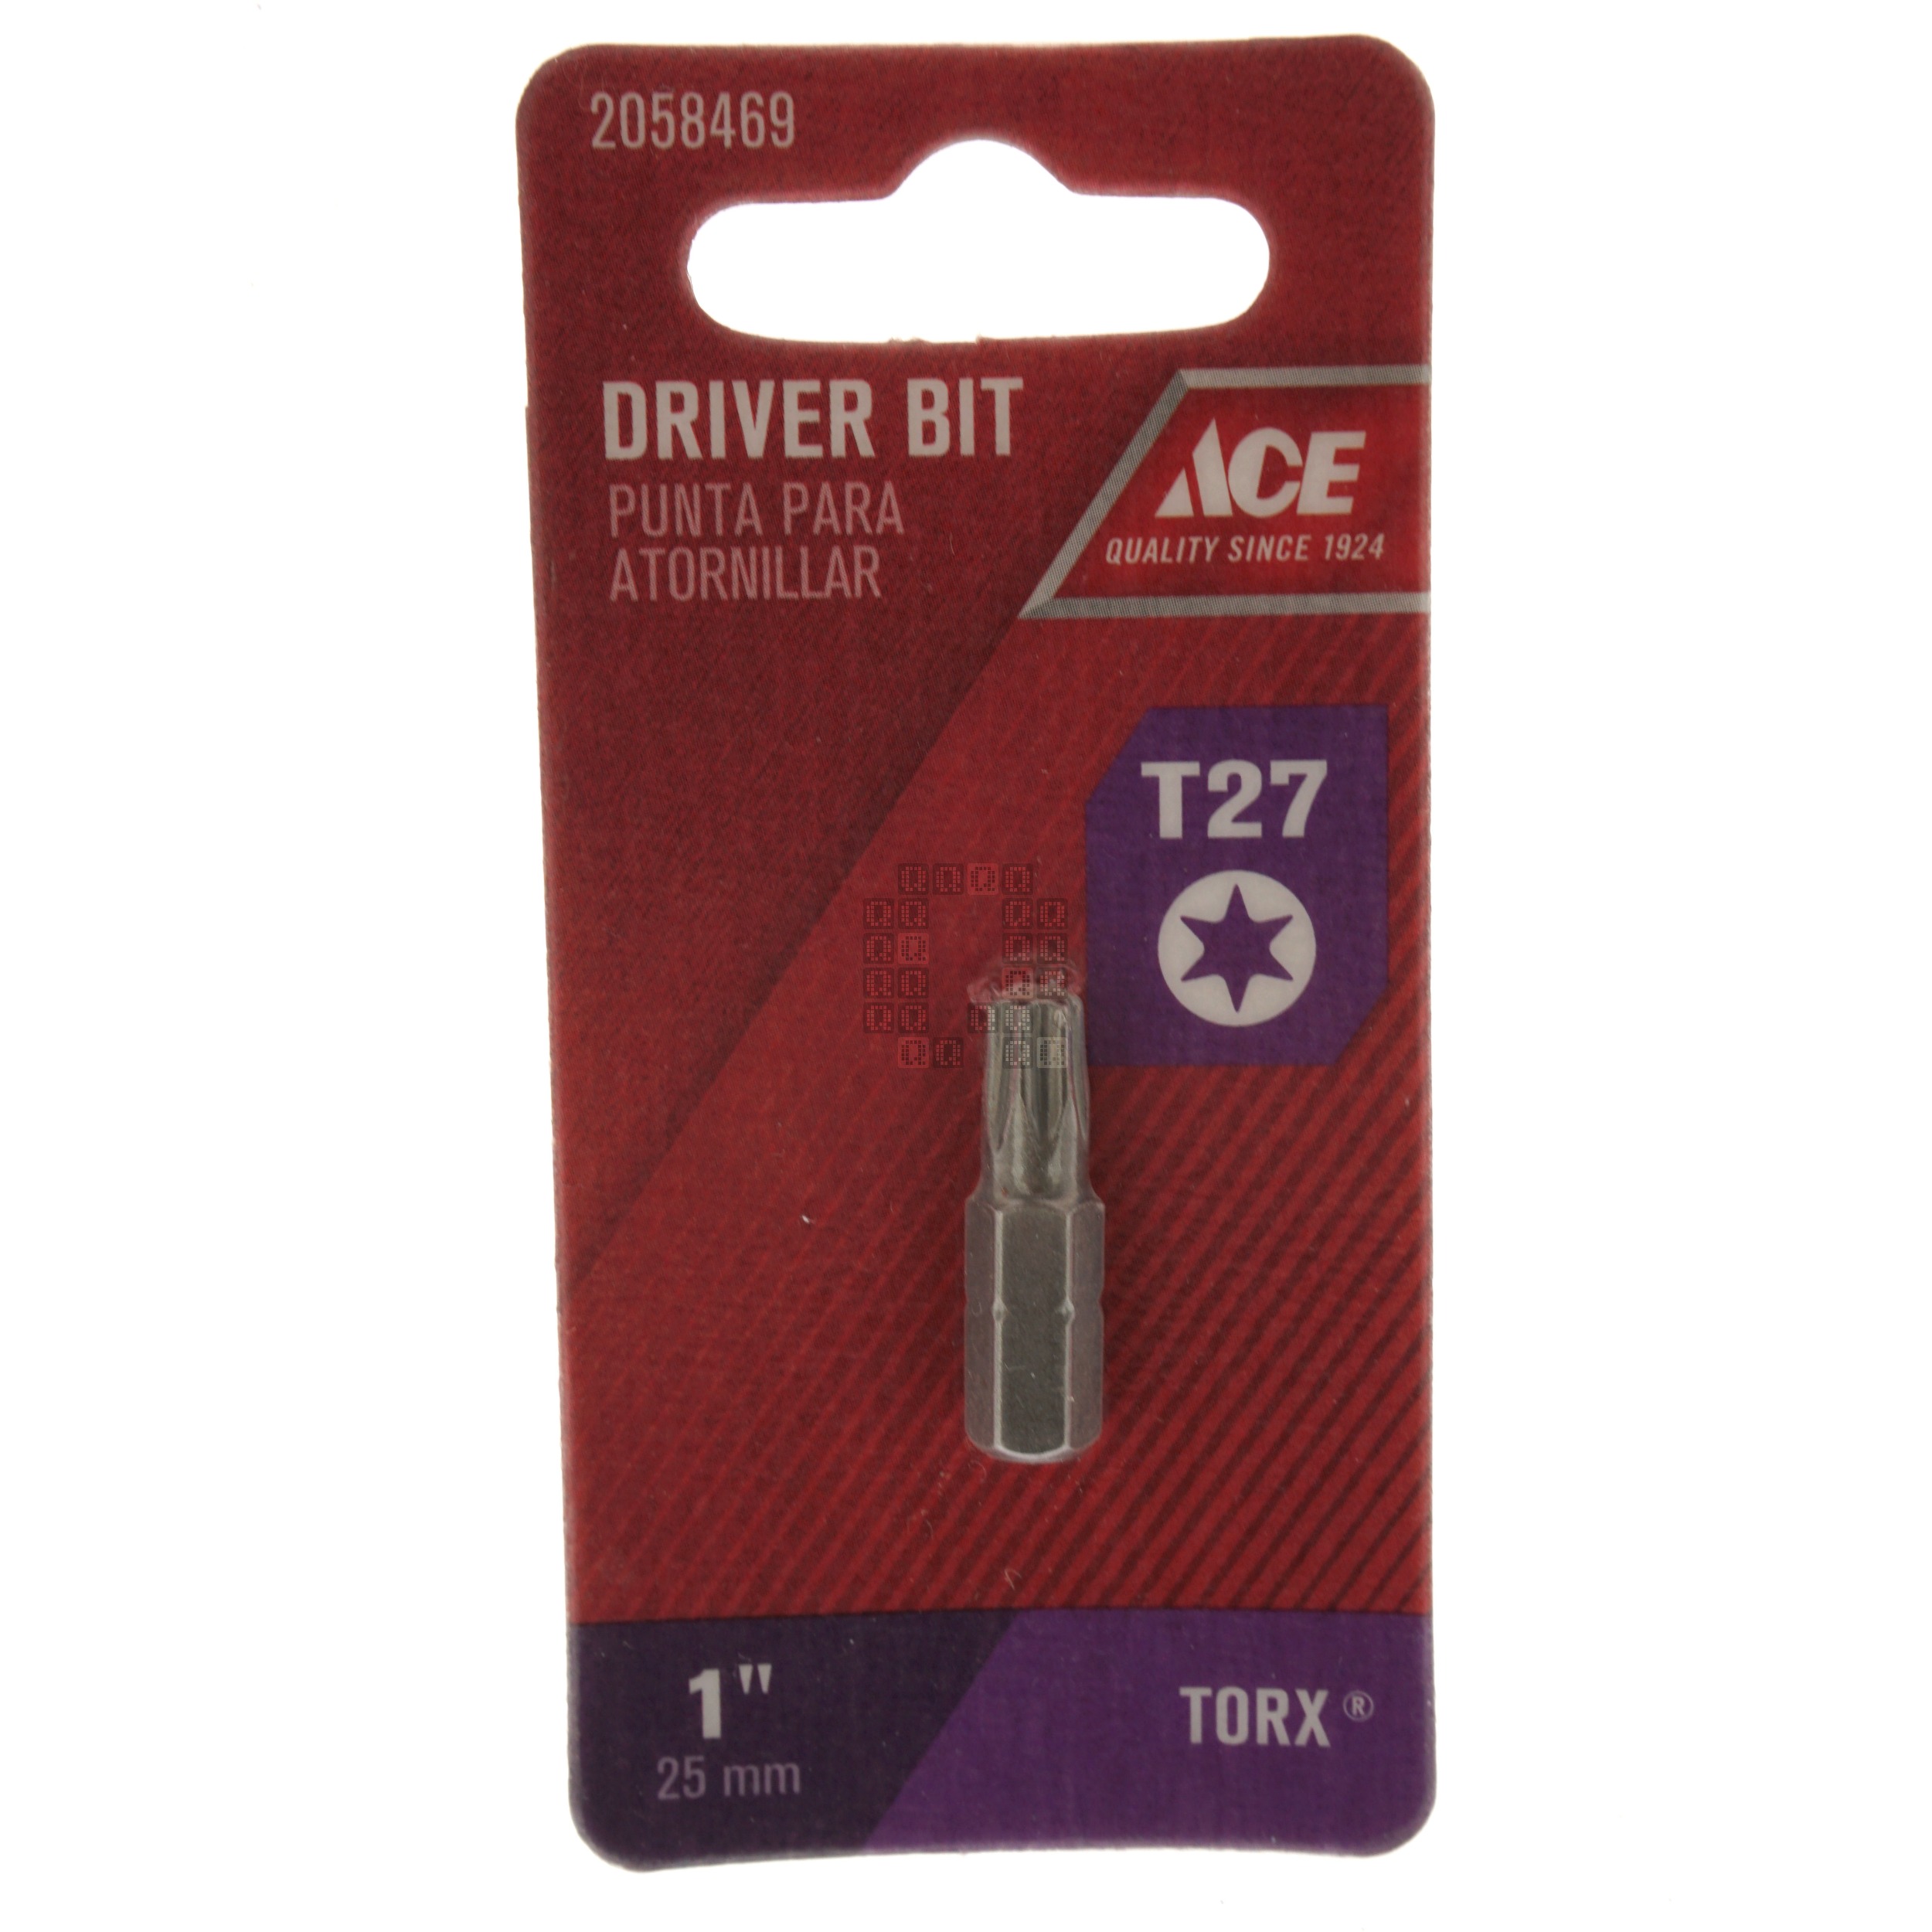 ACE Hardware 2058469 T27 TORX Driver Bit, 1" Length, 1/4" Hex Drive